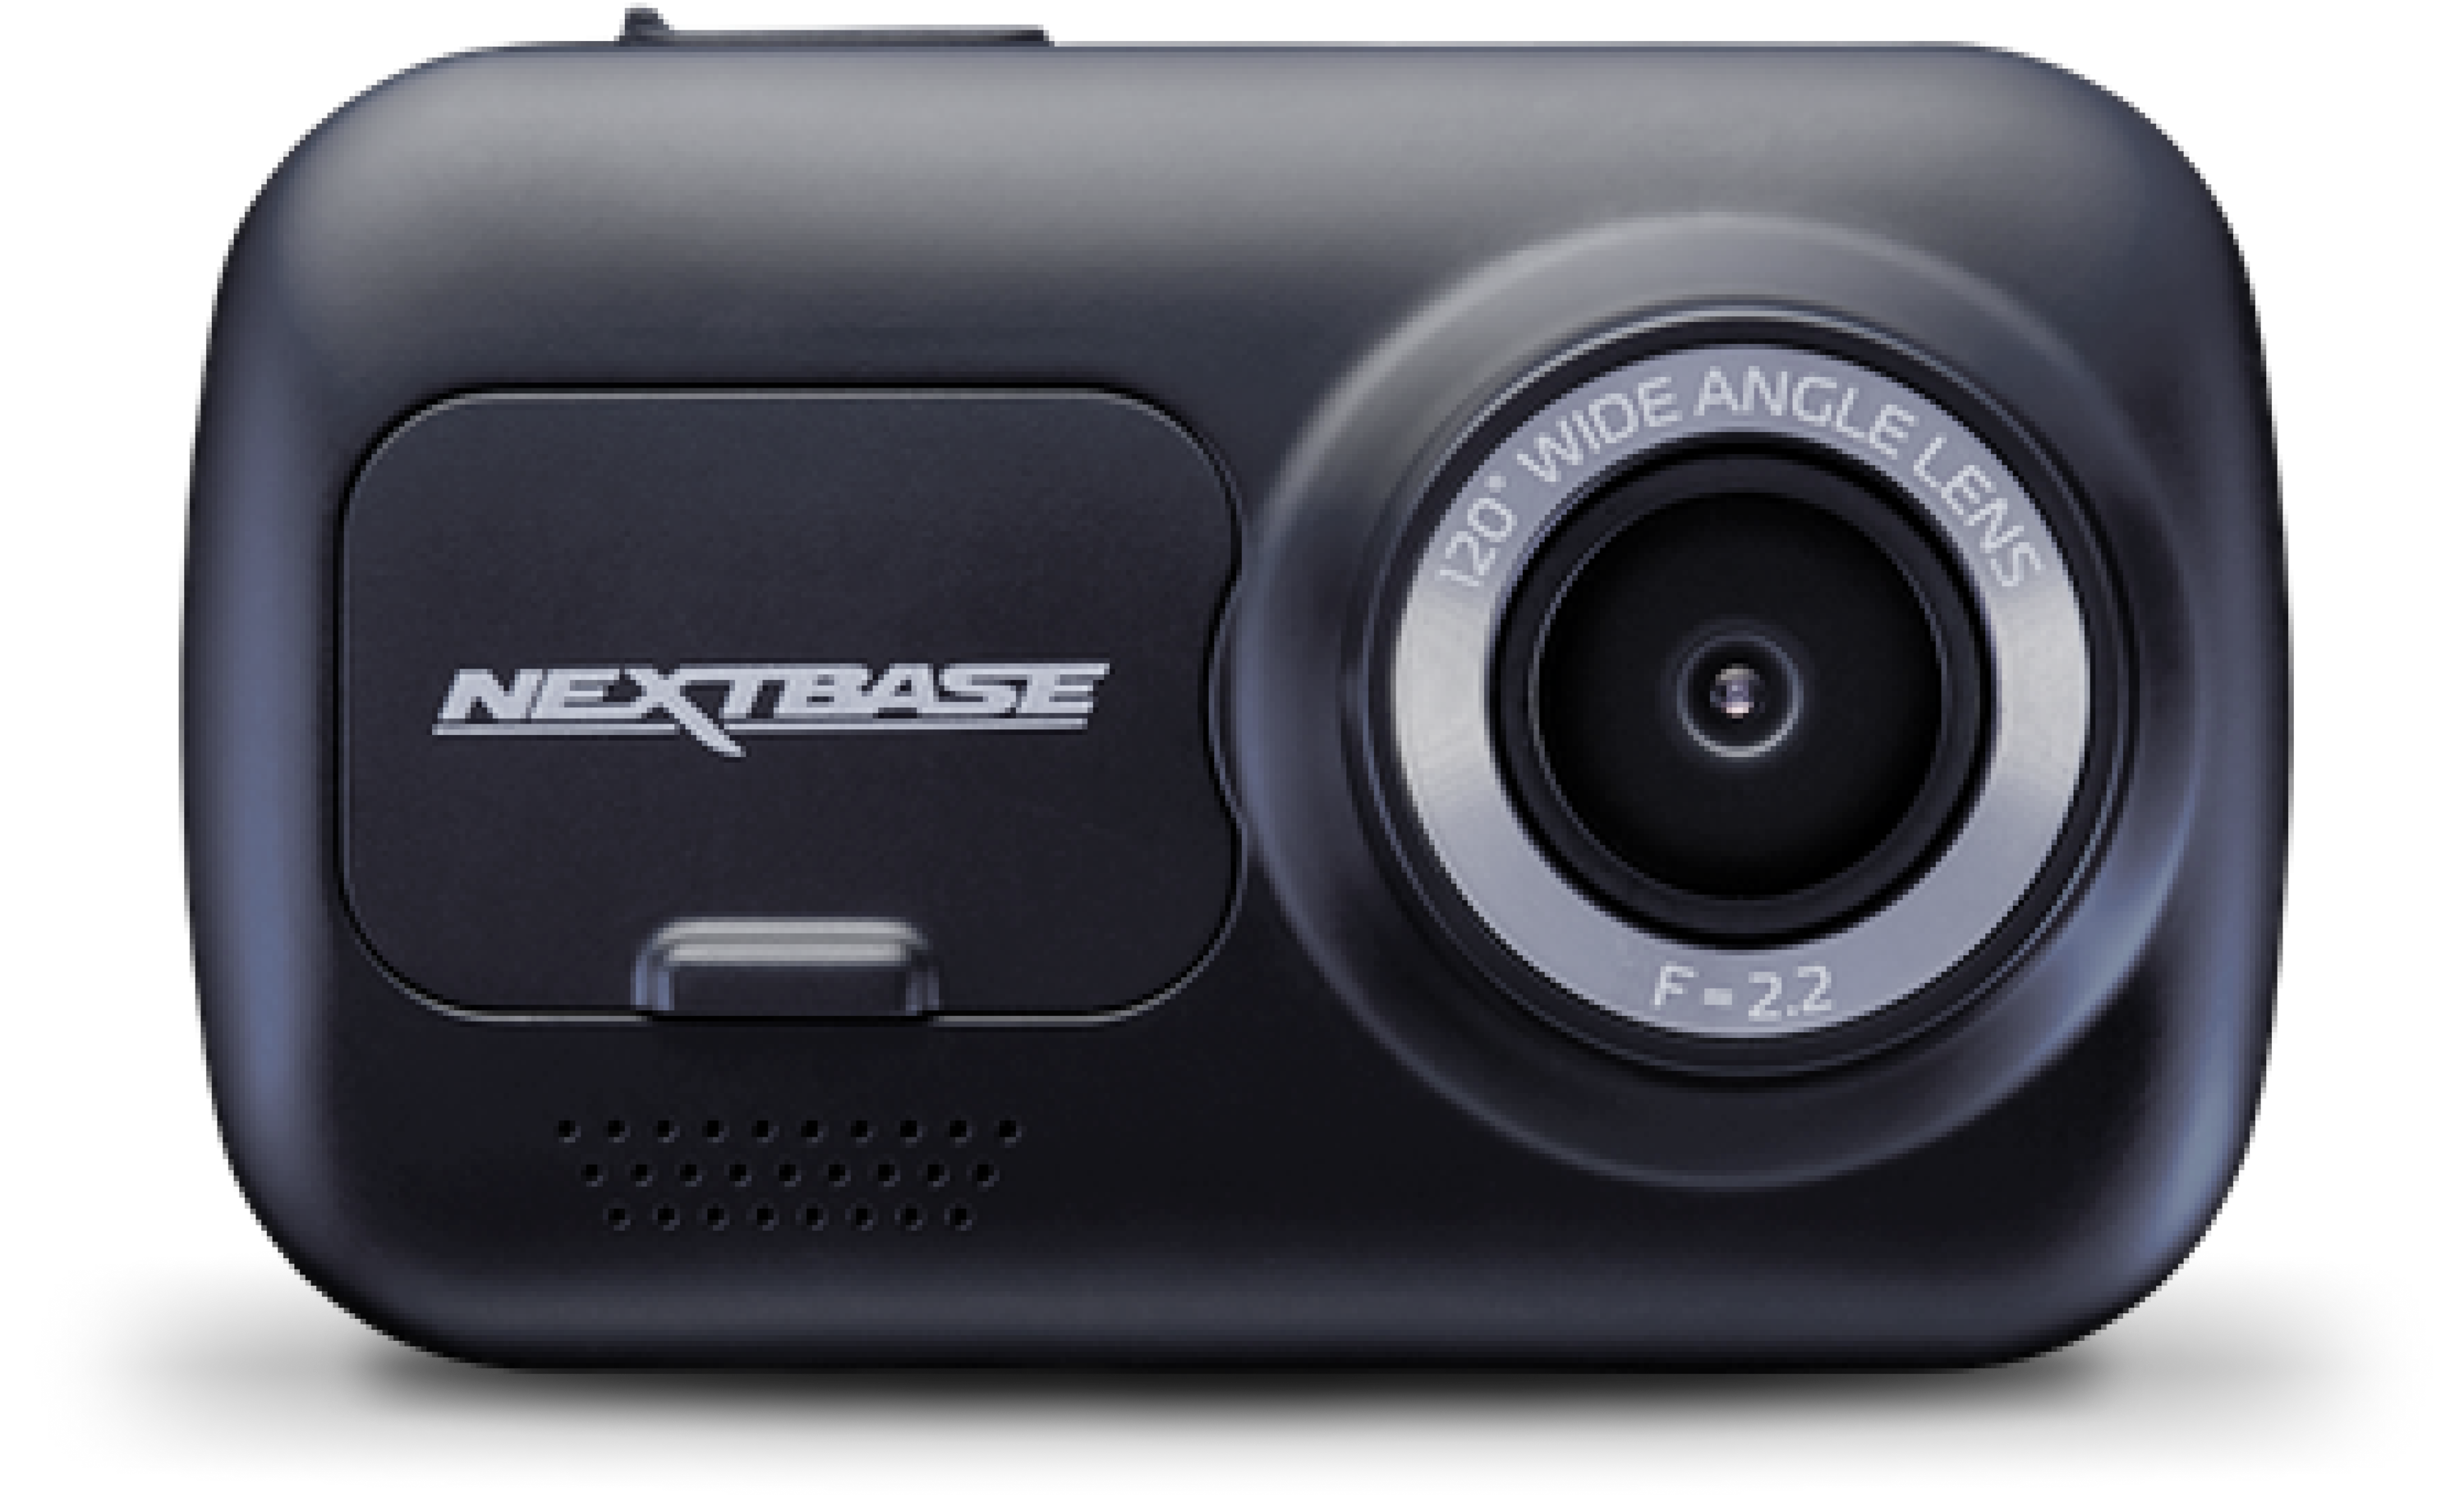 Dash Cams, Dash Cameras, Dash Cam